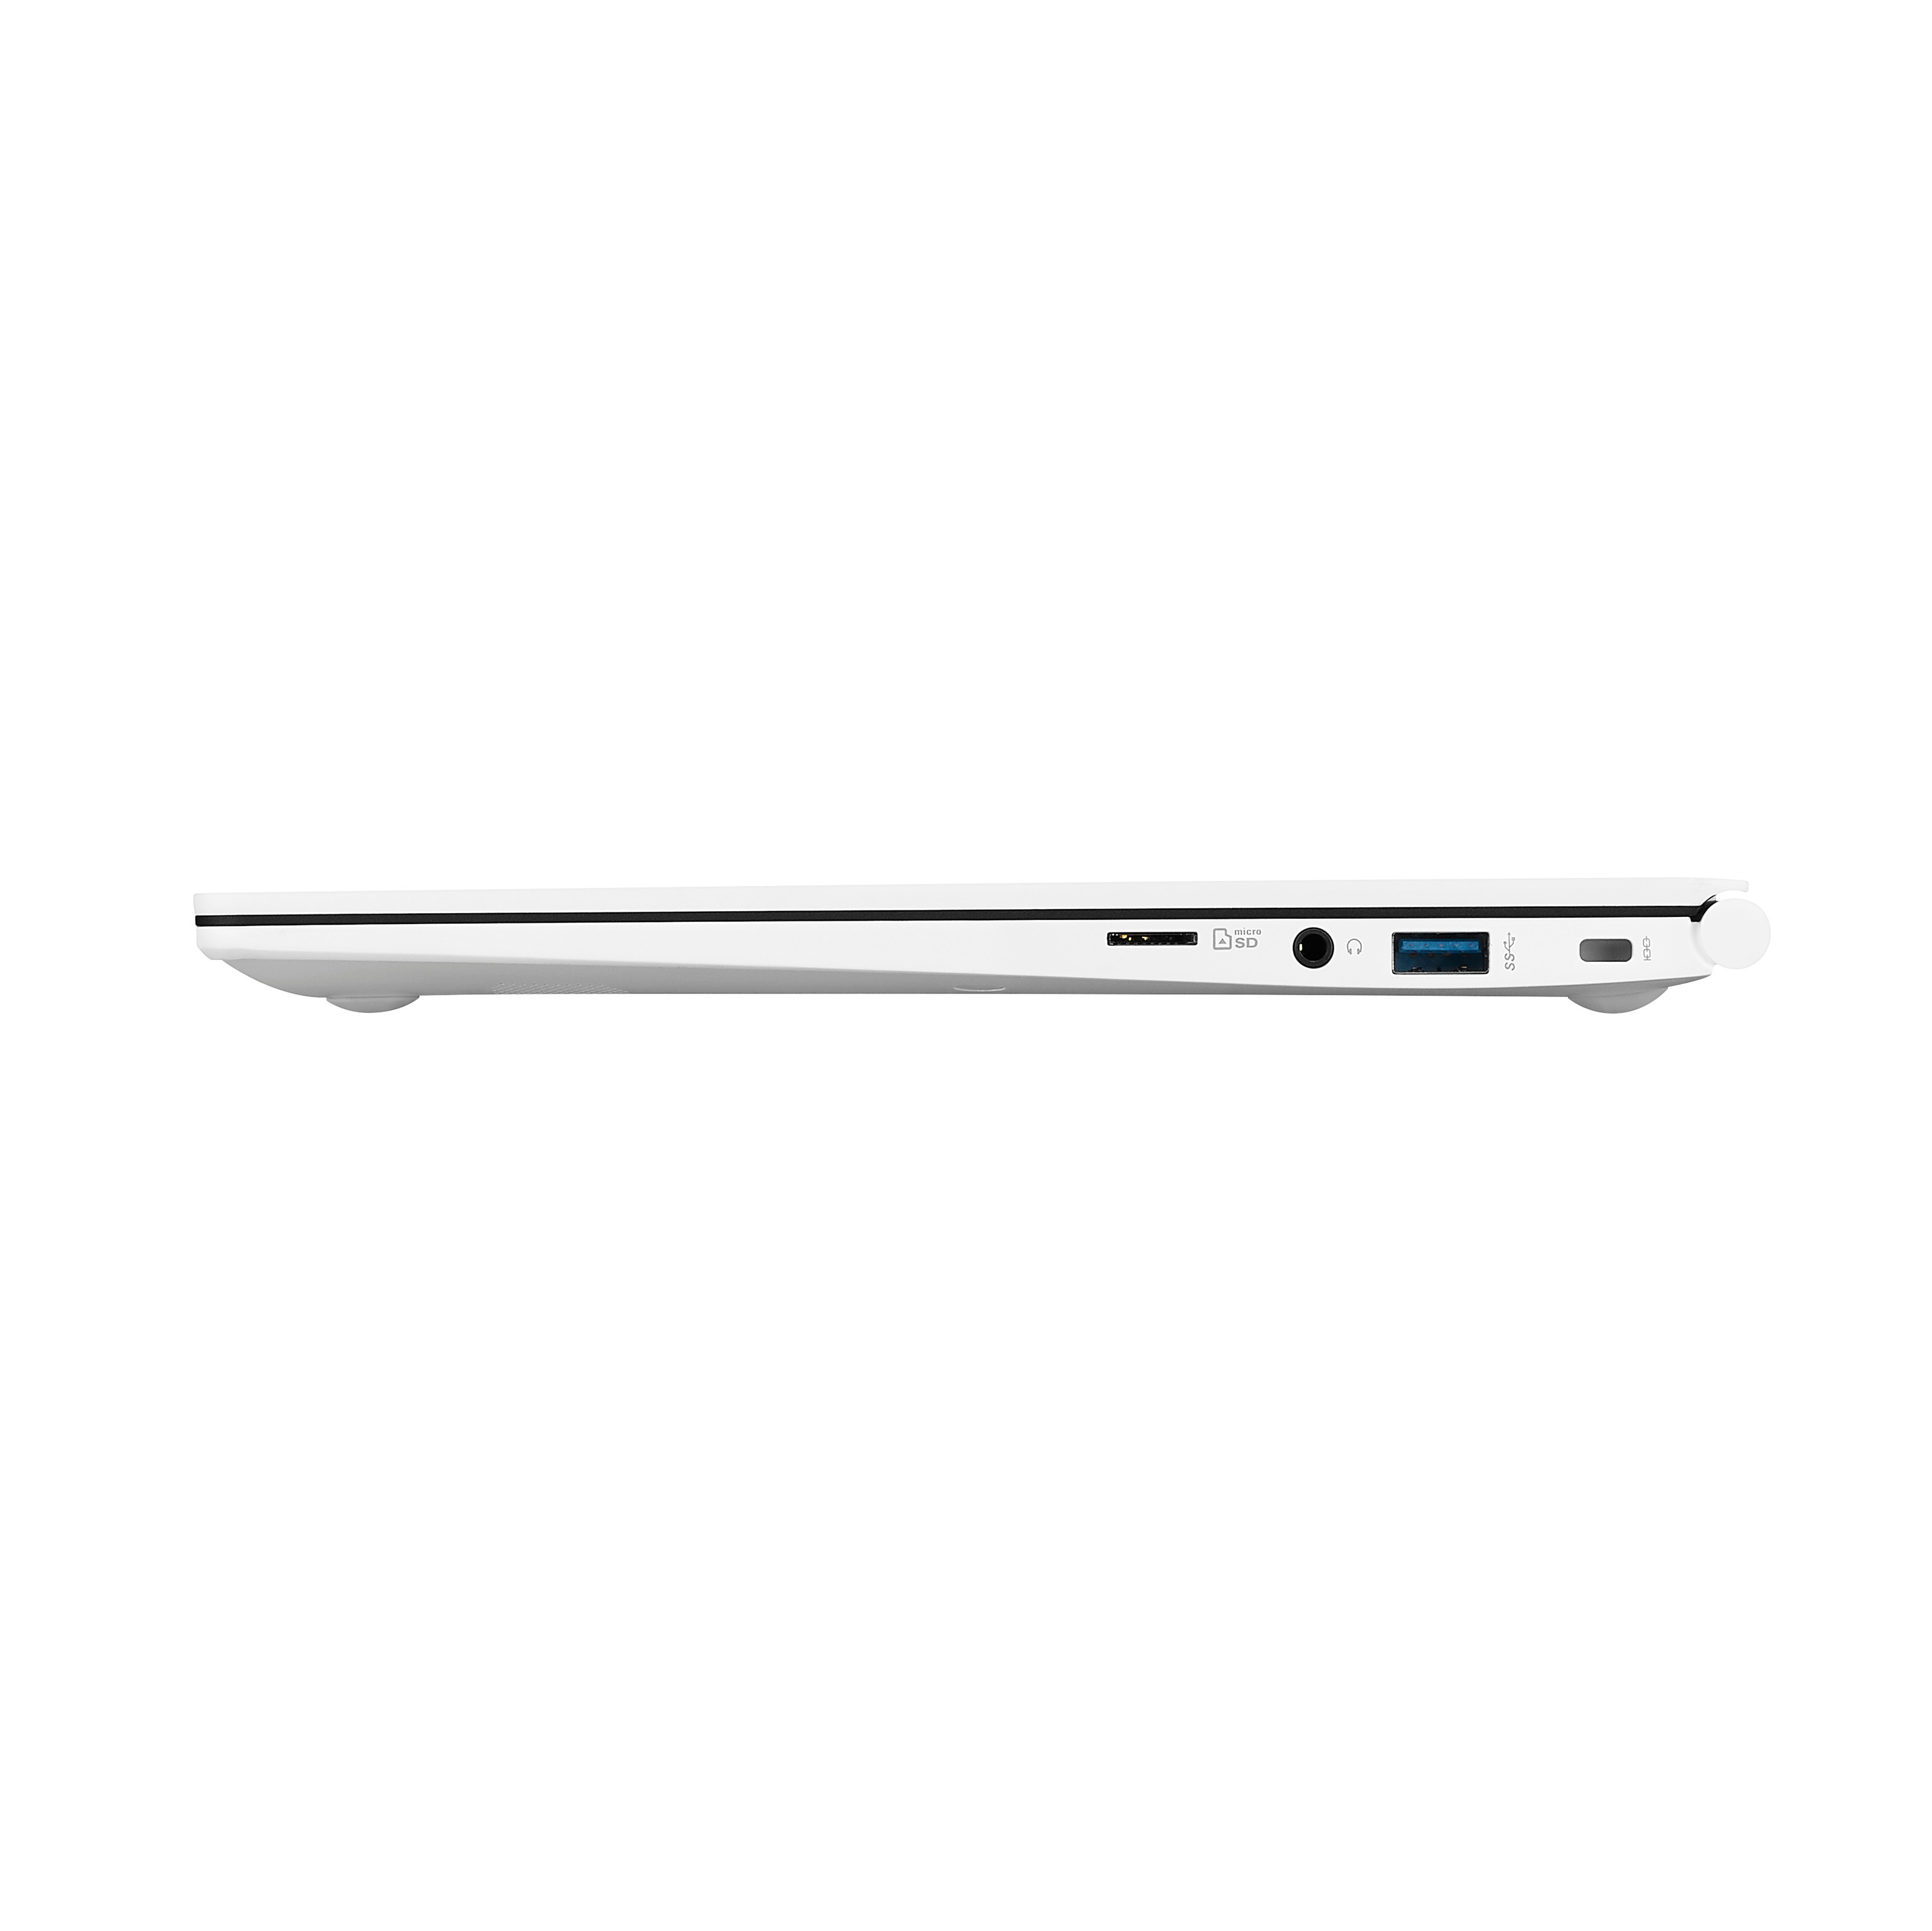 LG gram 14 inch Ultra-Lightweight Laptop with Intel Core i5 processor, 14Z990-U.AAW5U1 - image 3 of 10